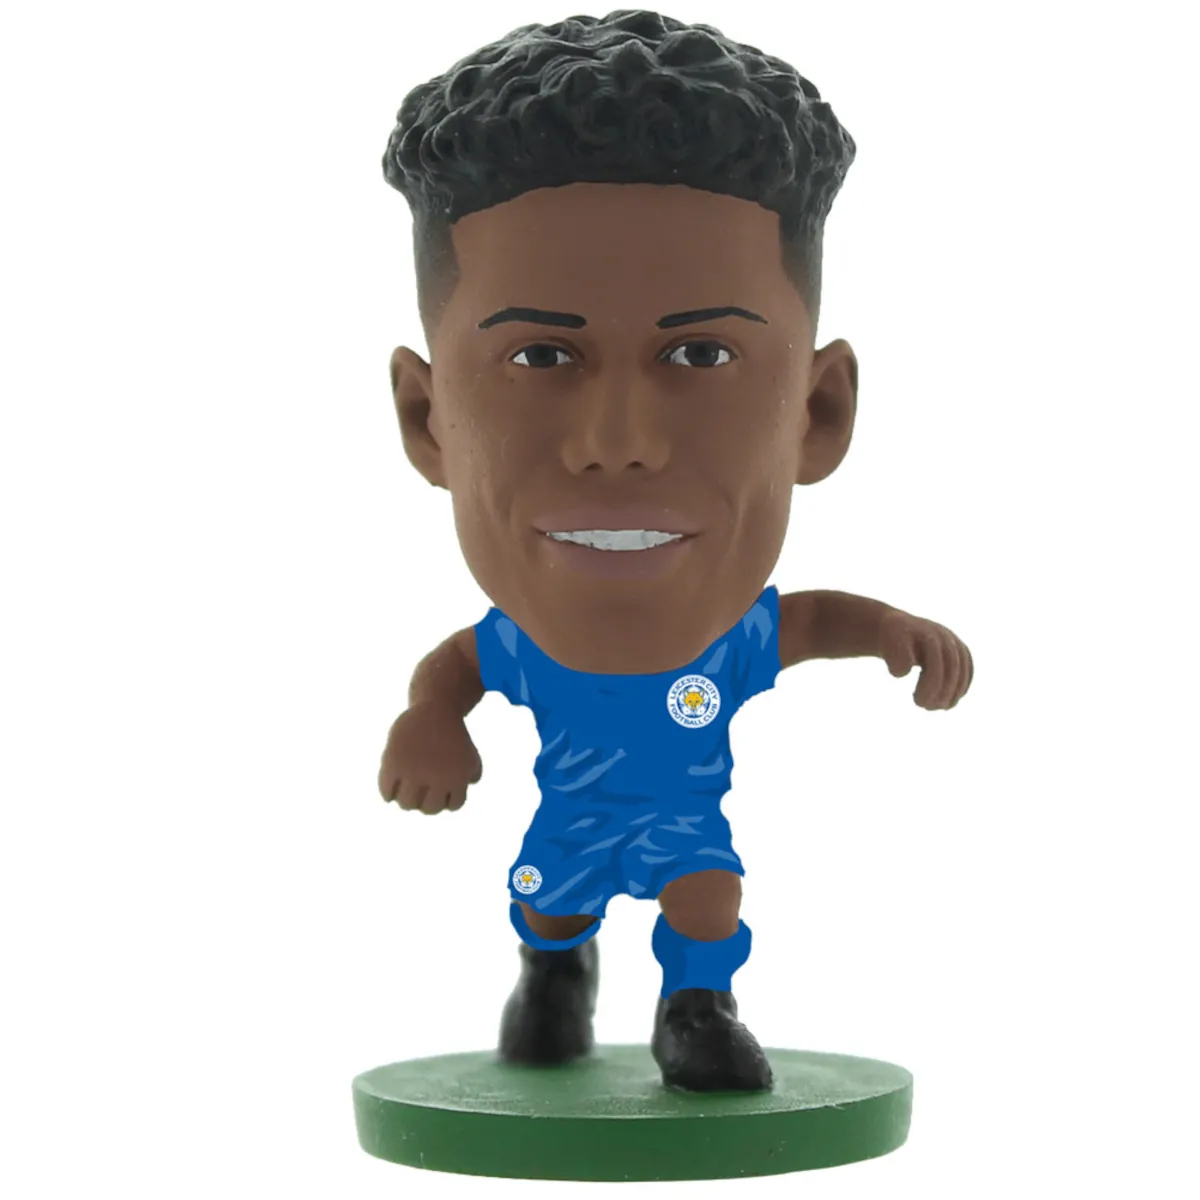 TM-01324 Leicester City FC SoccerStarz Collectable Figure - James Justin